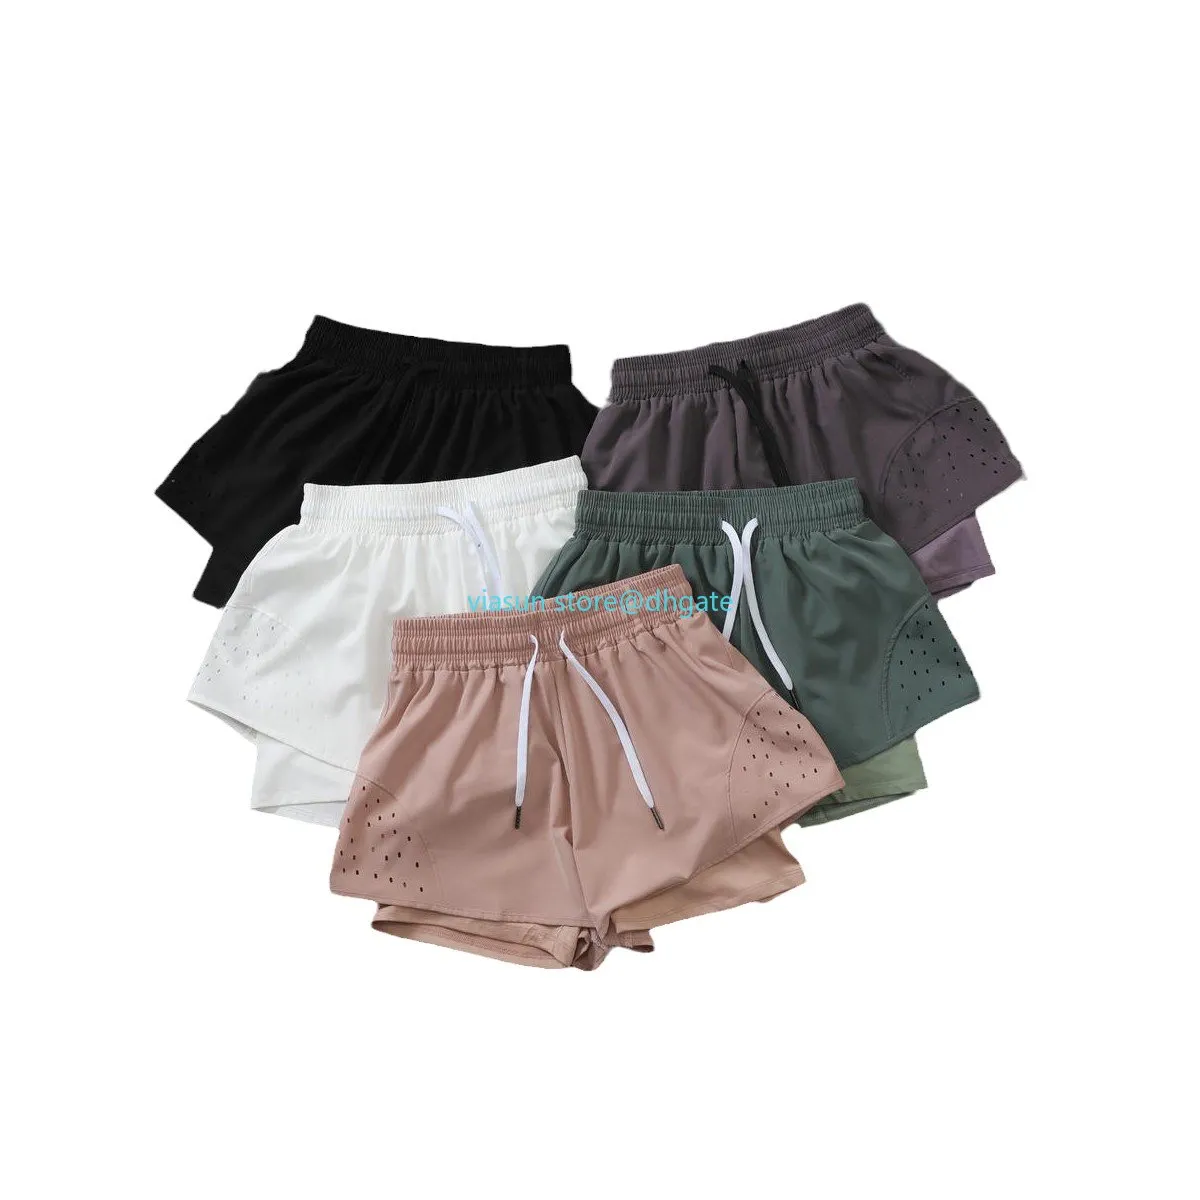 LU17 Yoga shorts Women's Summer Sports Quick Dry Fake Two Pieces Yoga Pants Anti glare Fitness Running Elastic Sports Shorts